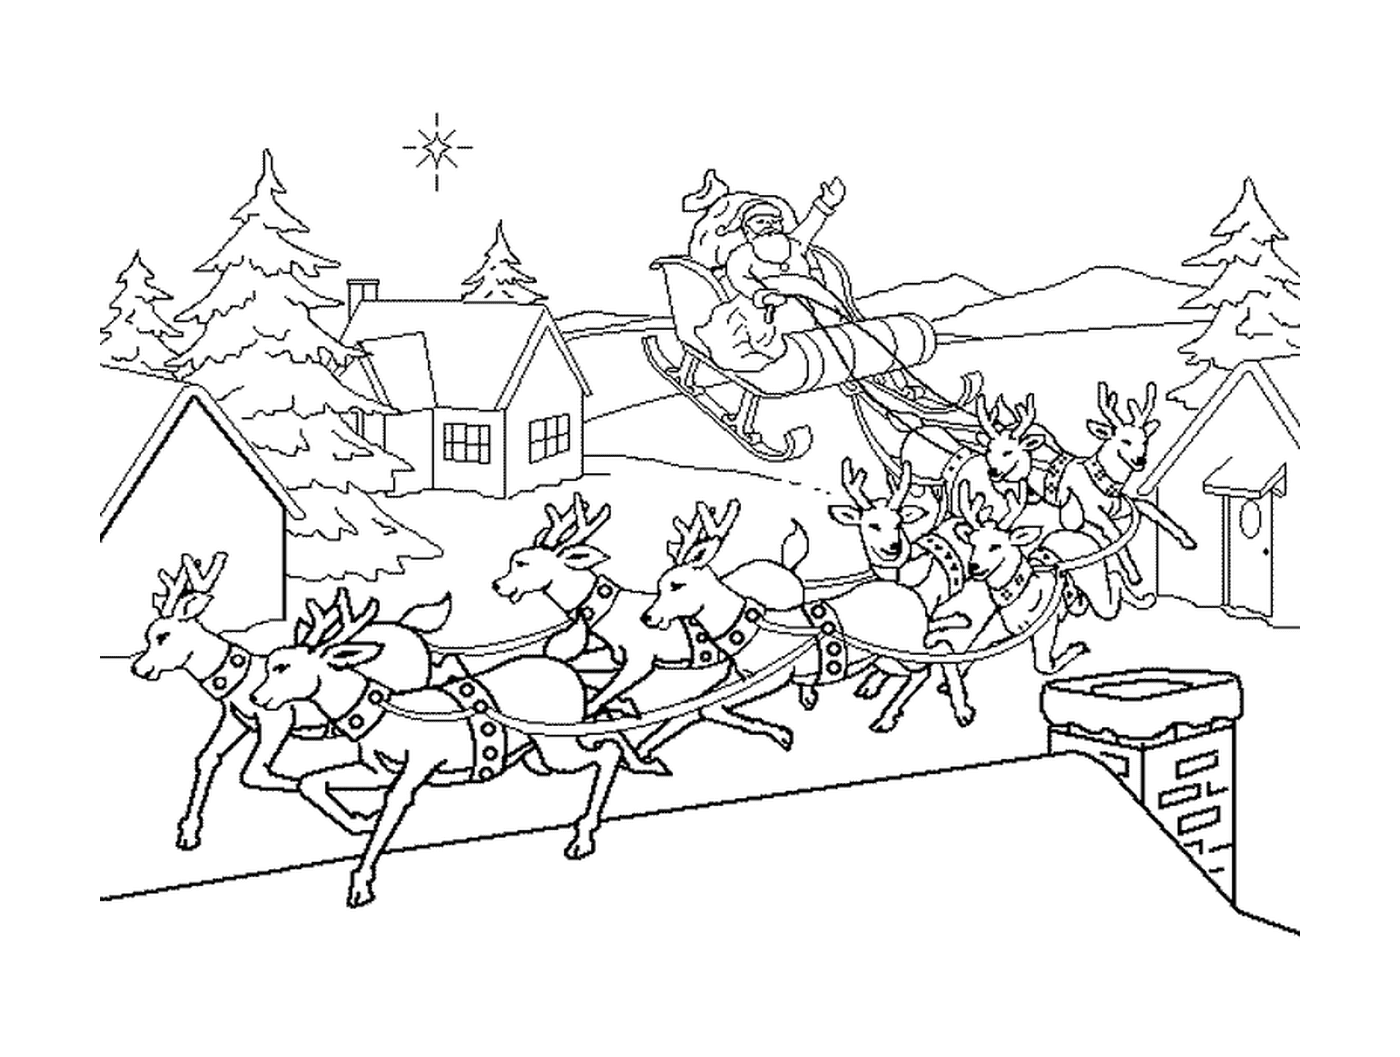  Santa's sledging line in a village 